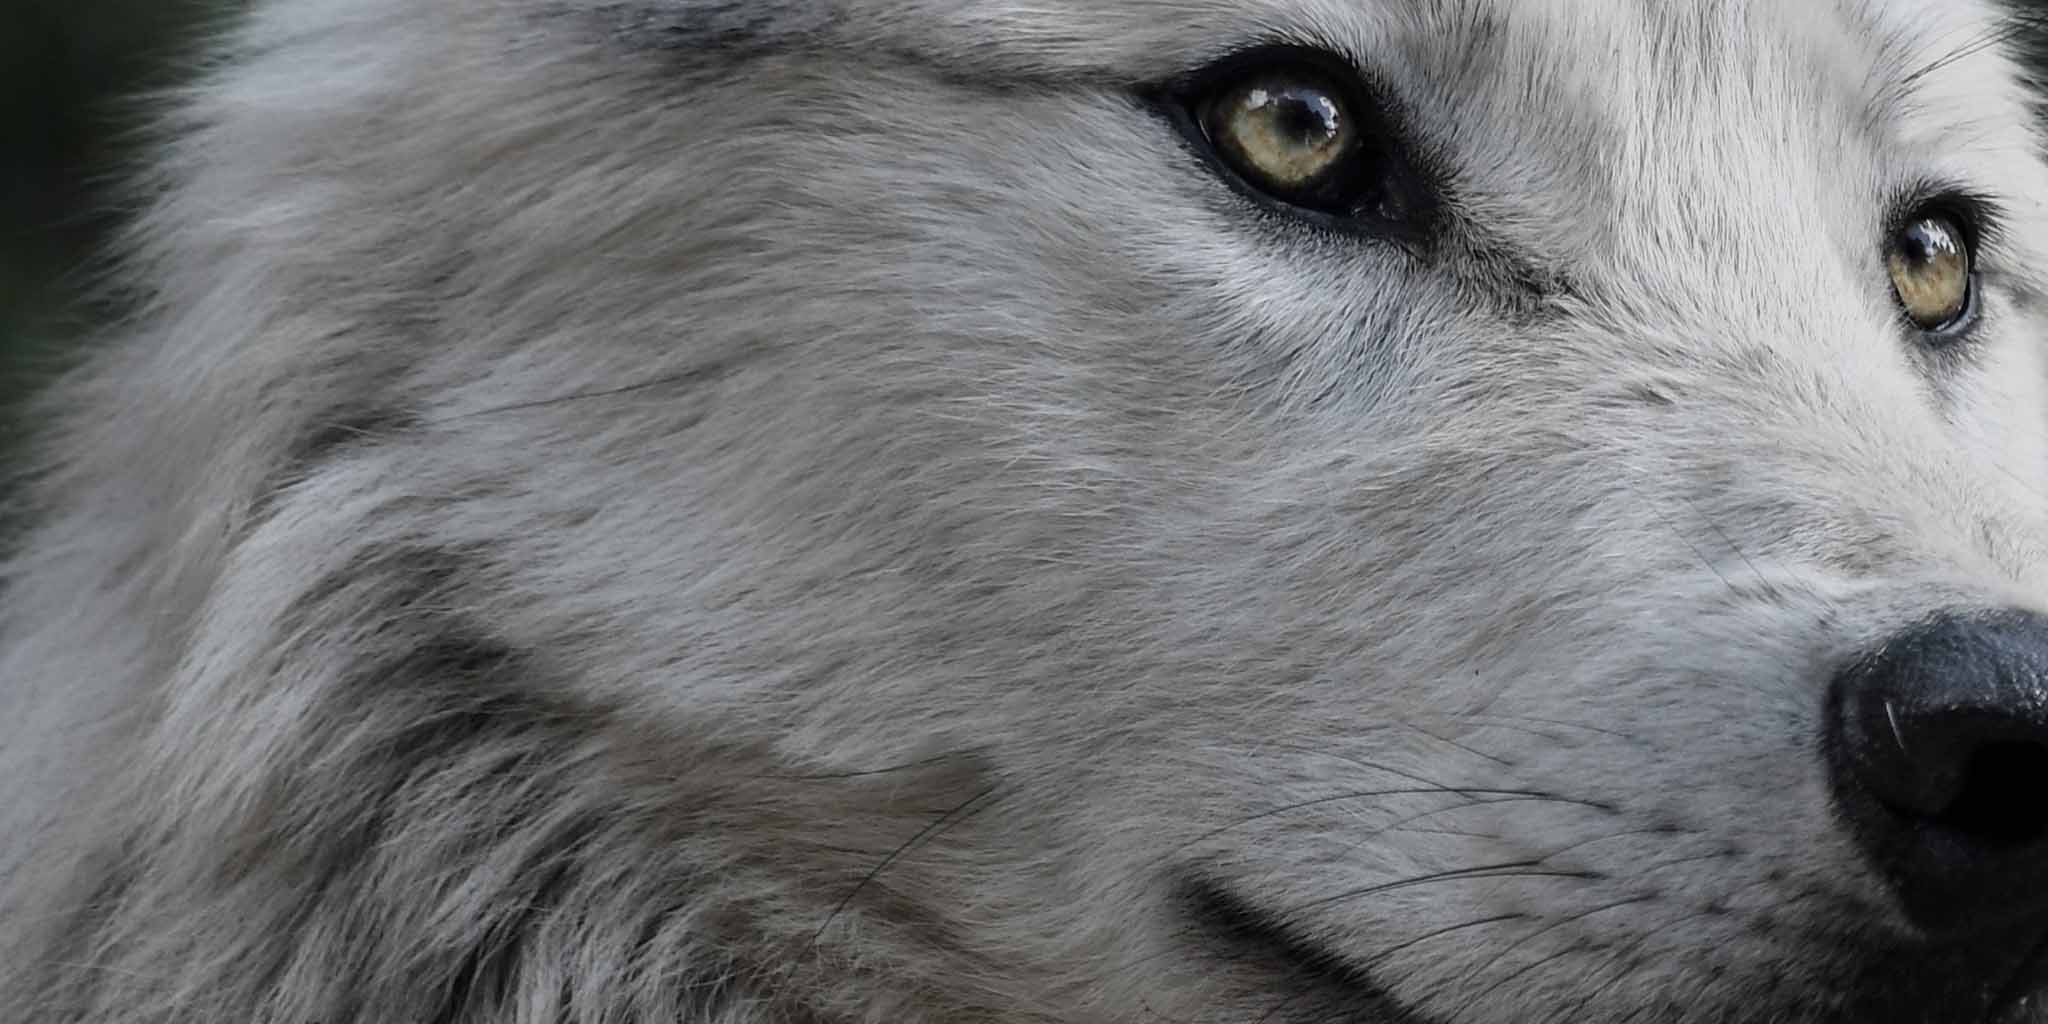 Closeup shot of an elegant grey wolf's face